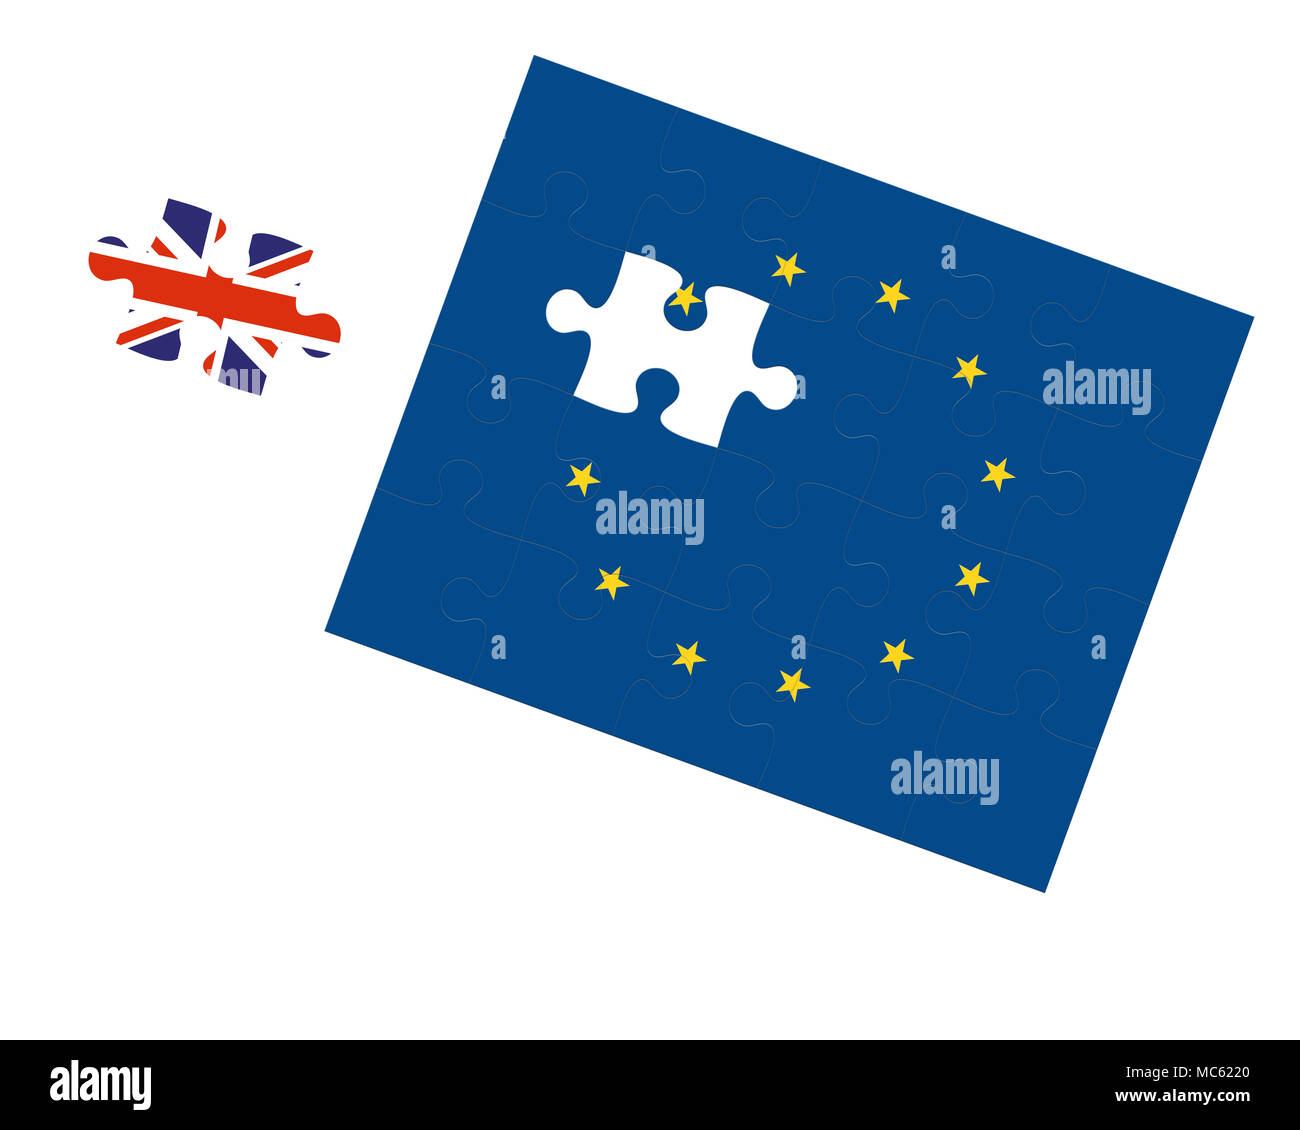 concept image of Brexit, Britain leaving the European union Stock Photo